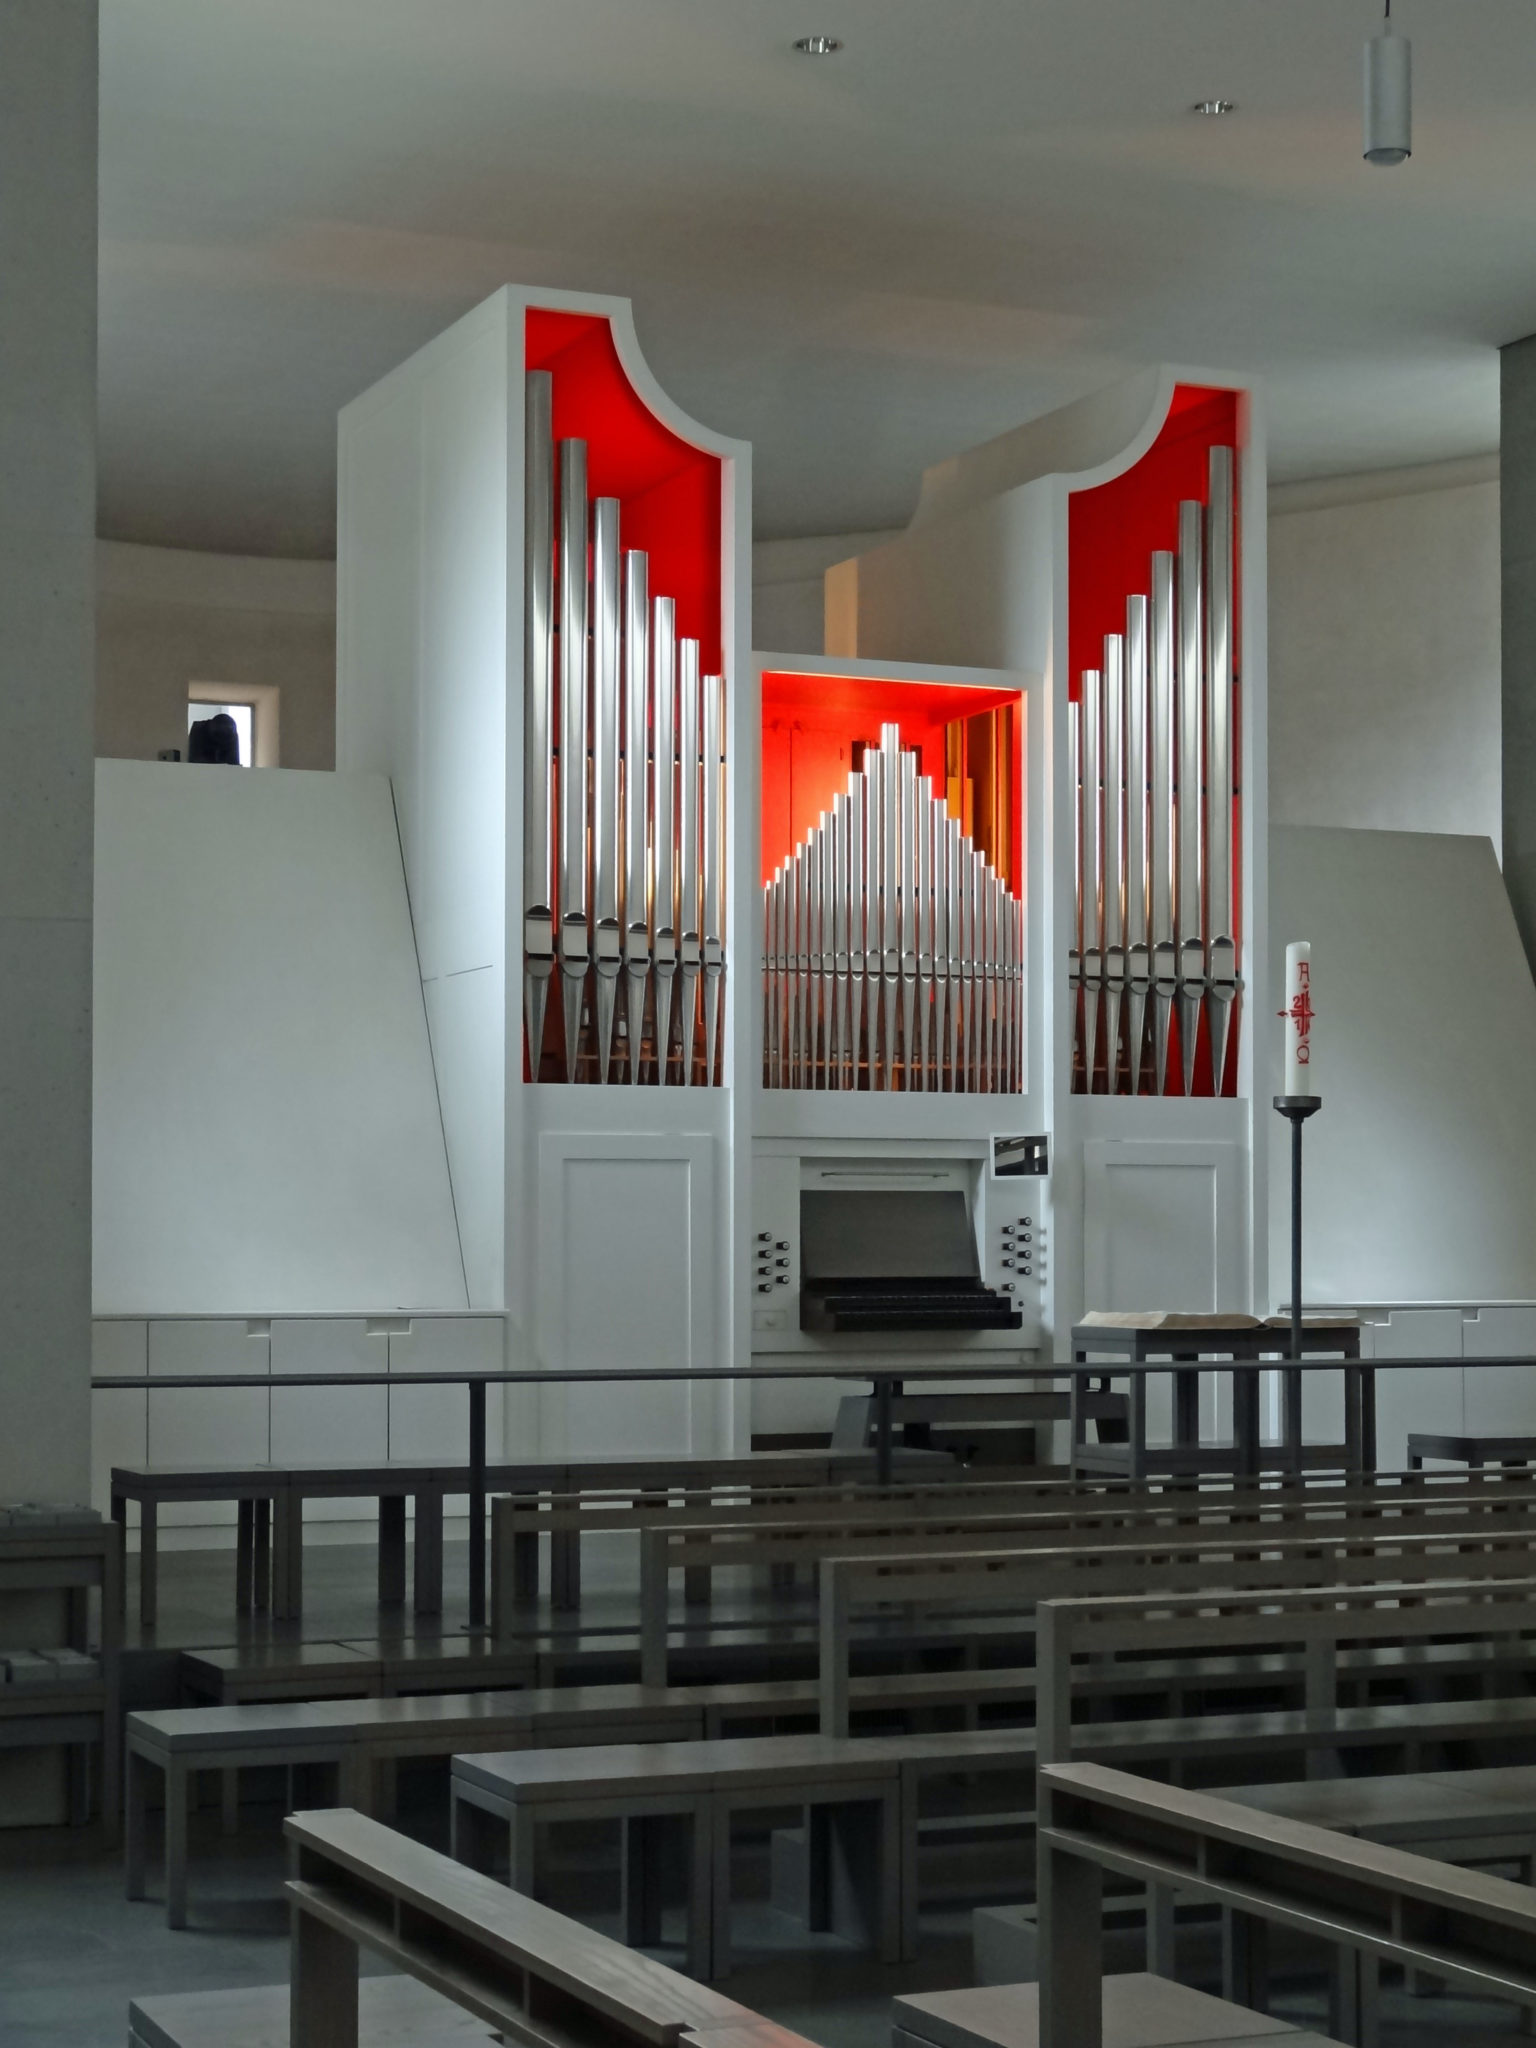 Orgel.jpg